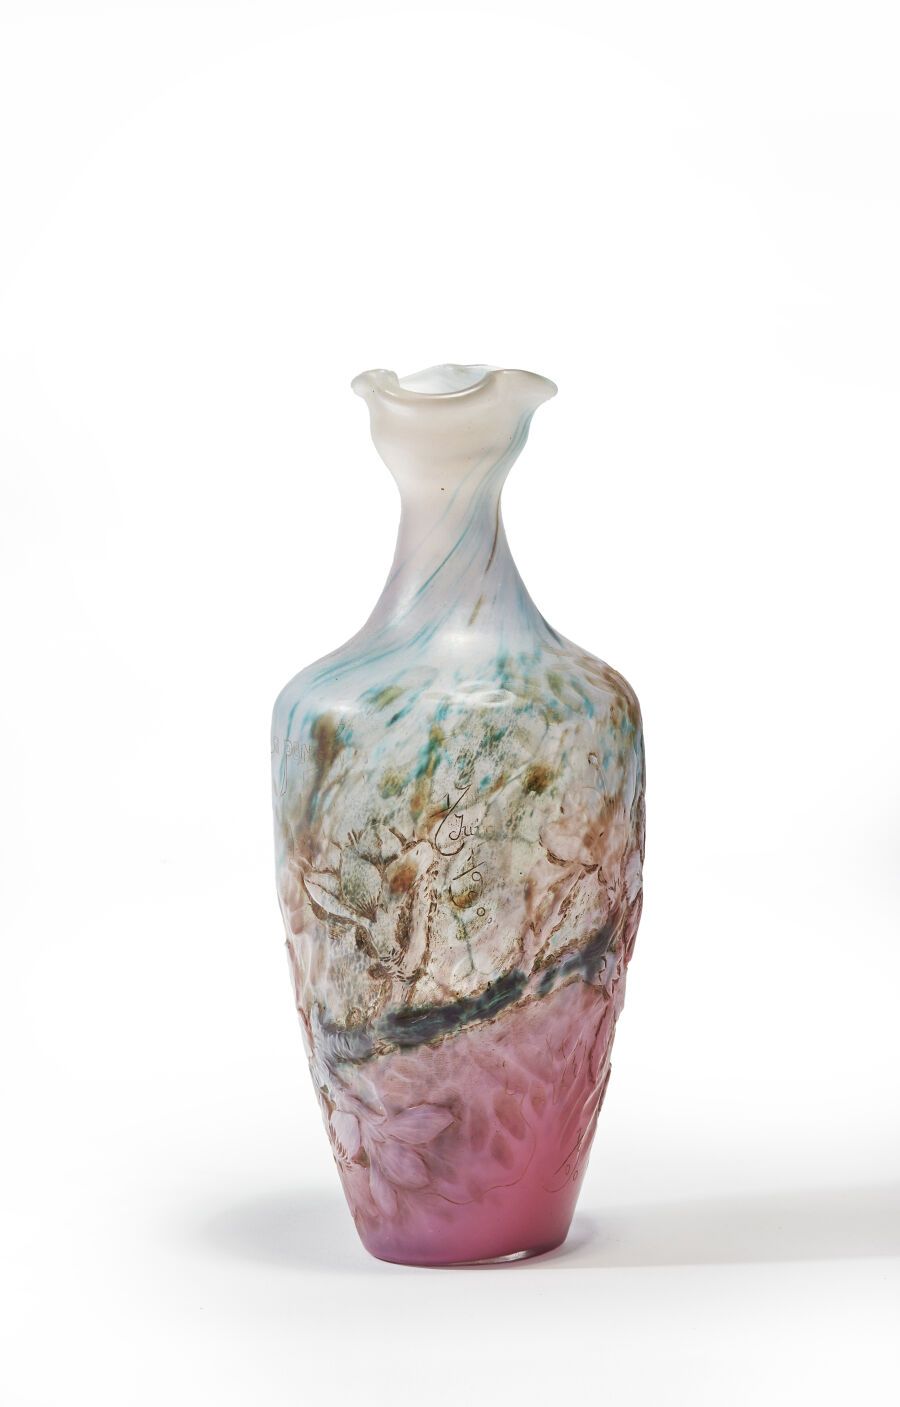 Null 埃米尔-加莱(1846-1904)
"他看到他的思想之花绽放"。
谈话的玻璃器皿。花瓶，瓶身为椭圆形，颈部为三叶形，用粉色混合玻璃热塑，有蓝色痕迹。思&hellip;